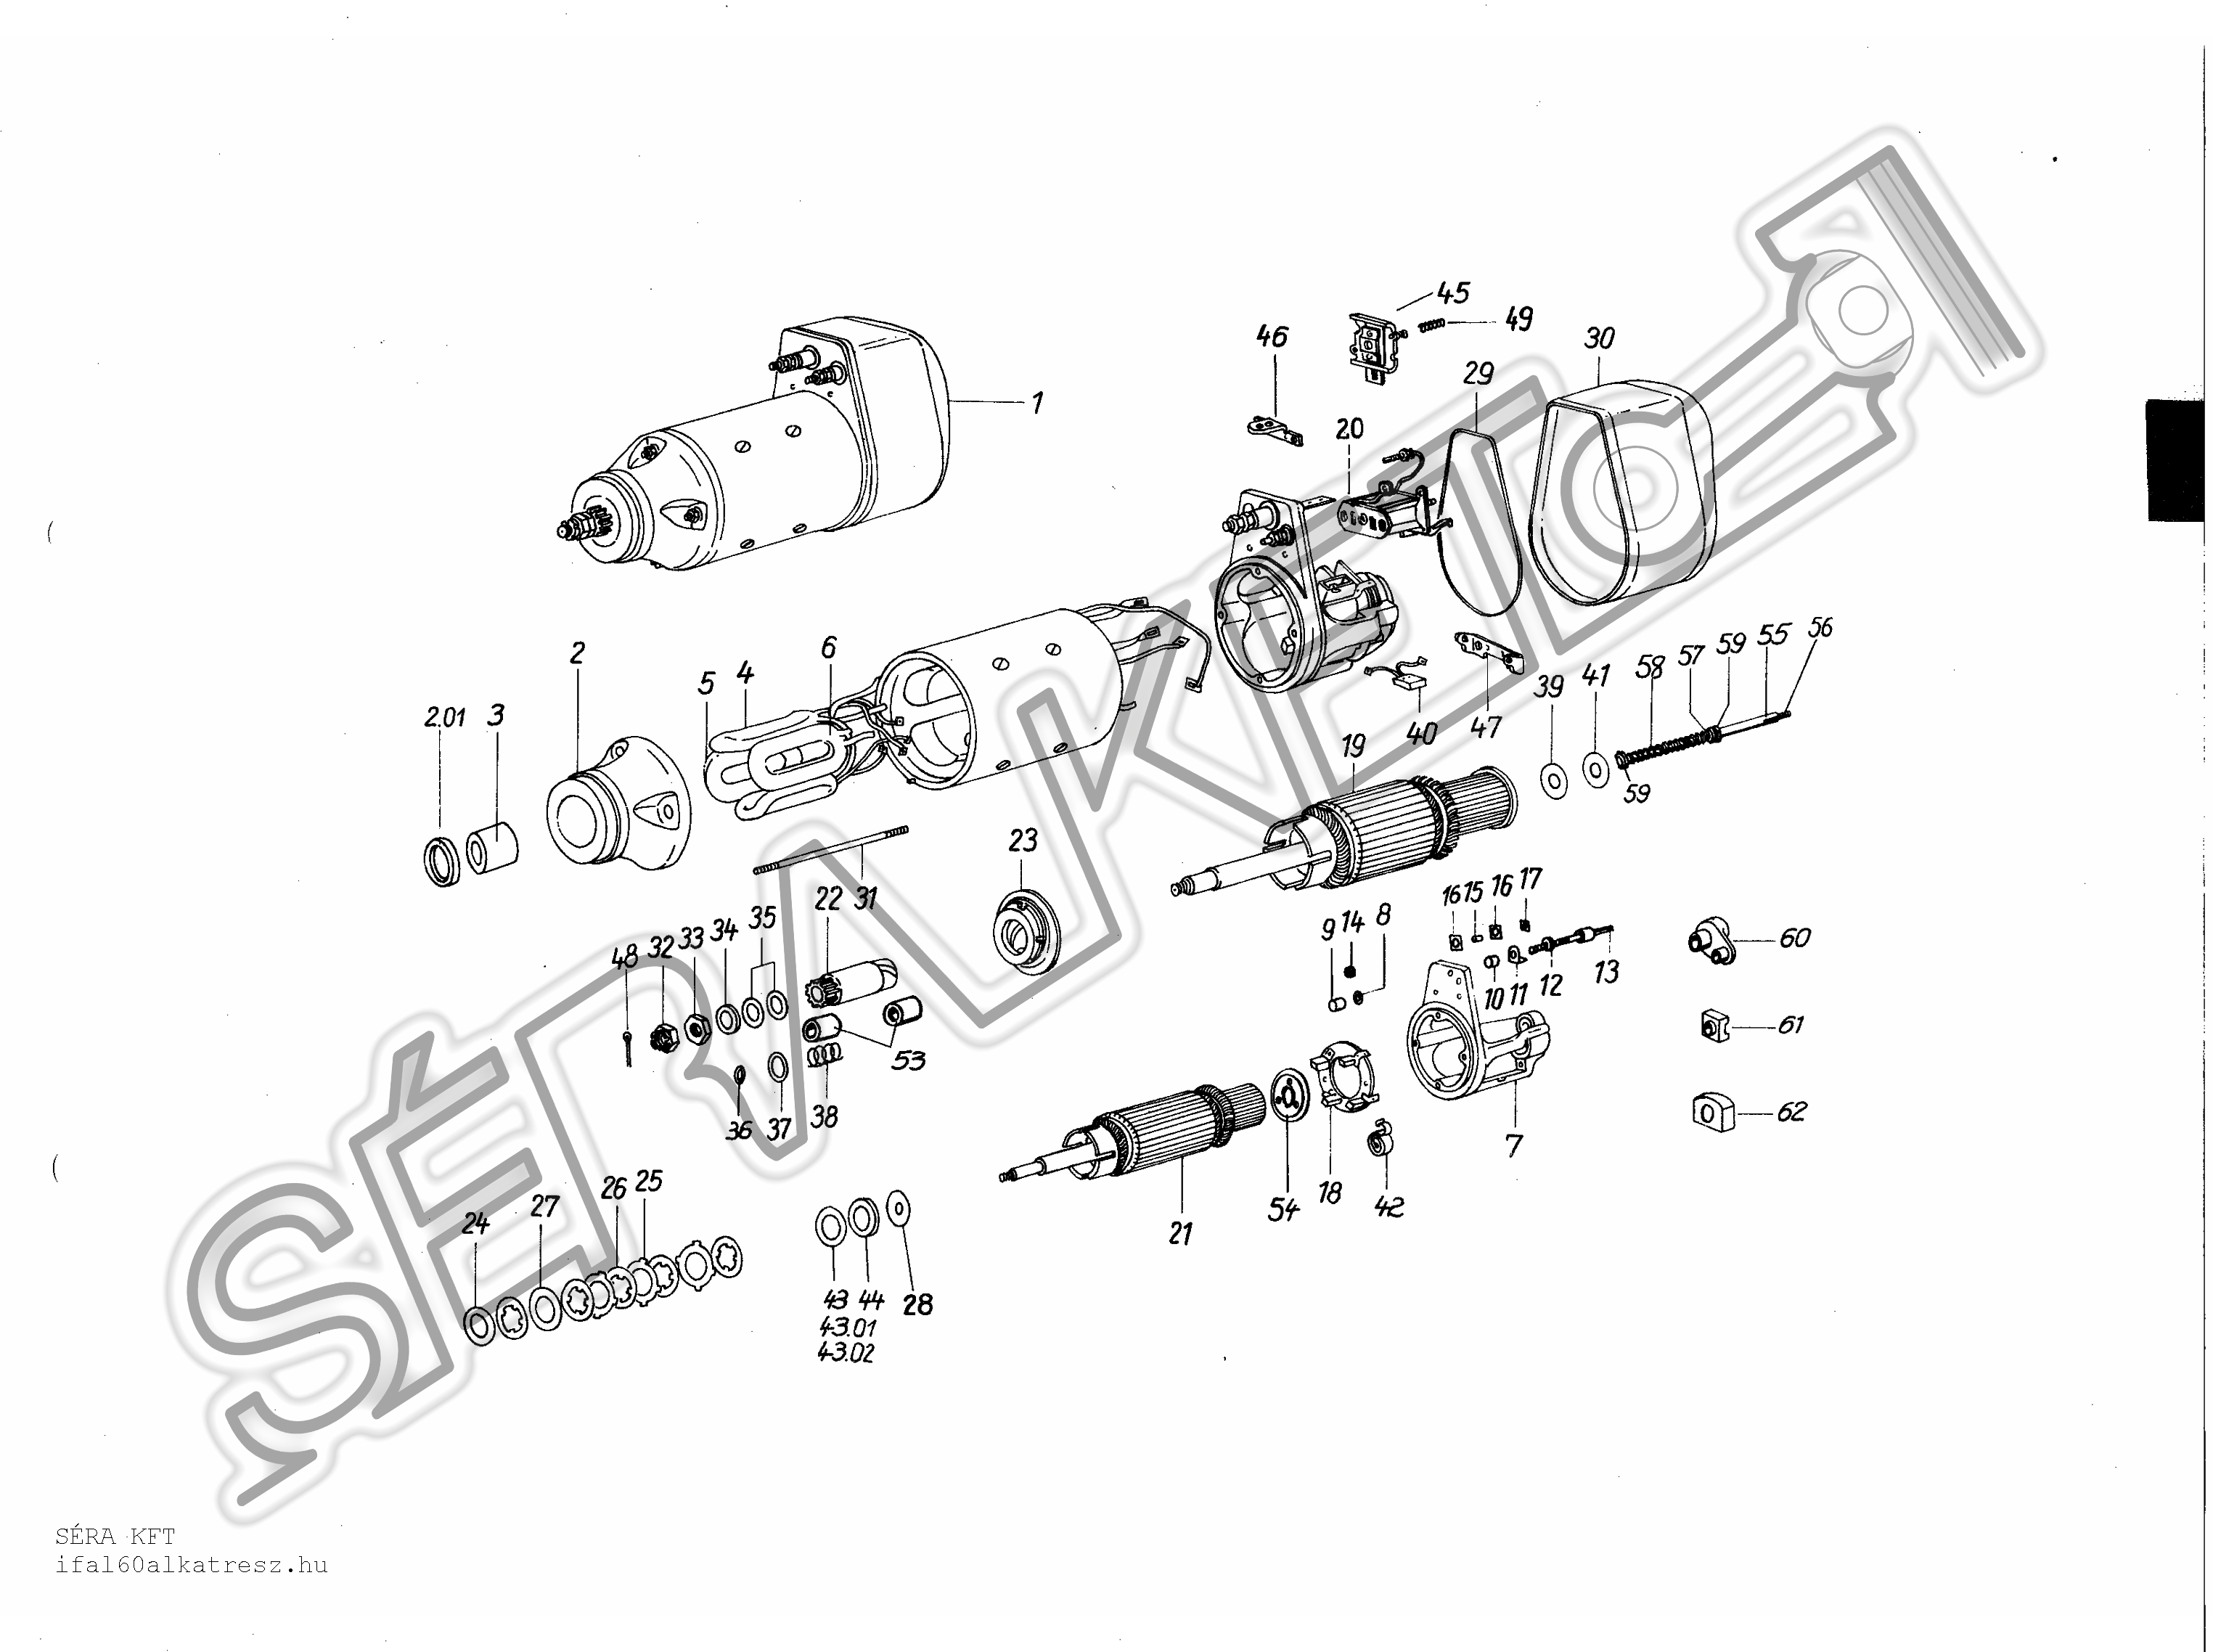 Sliding armature starter - components